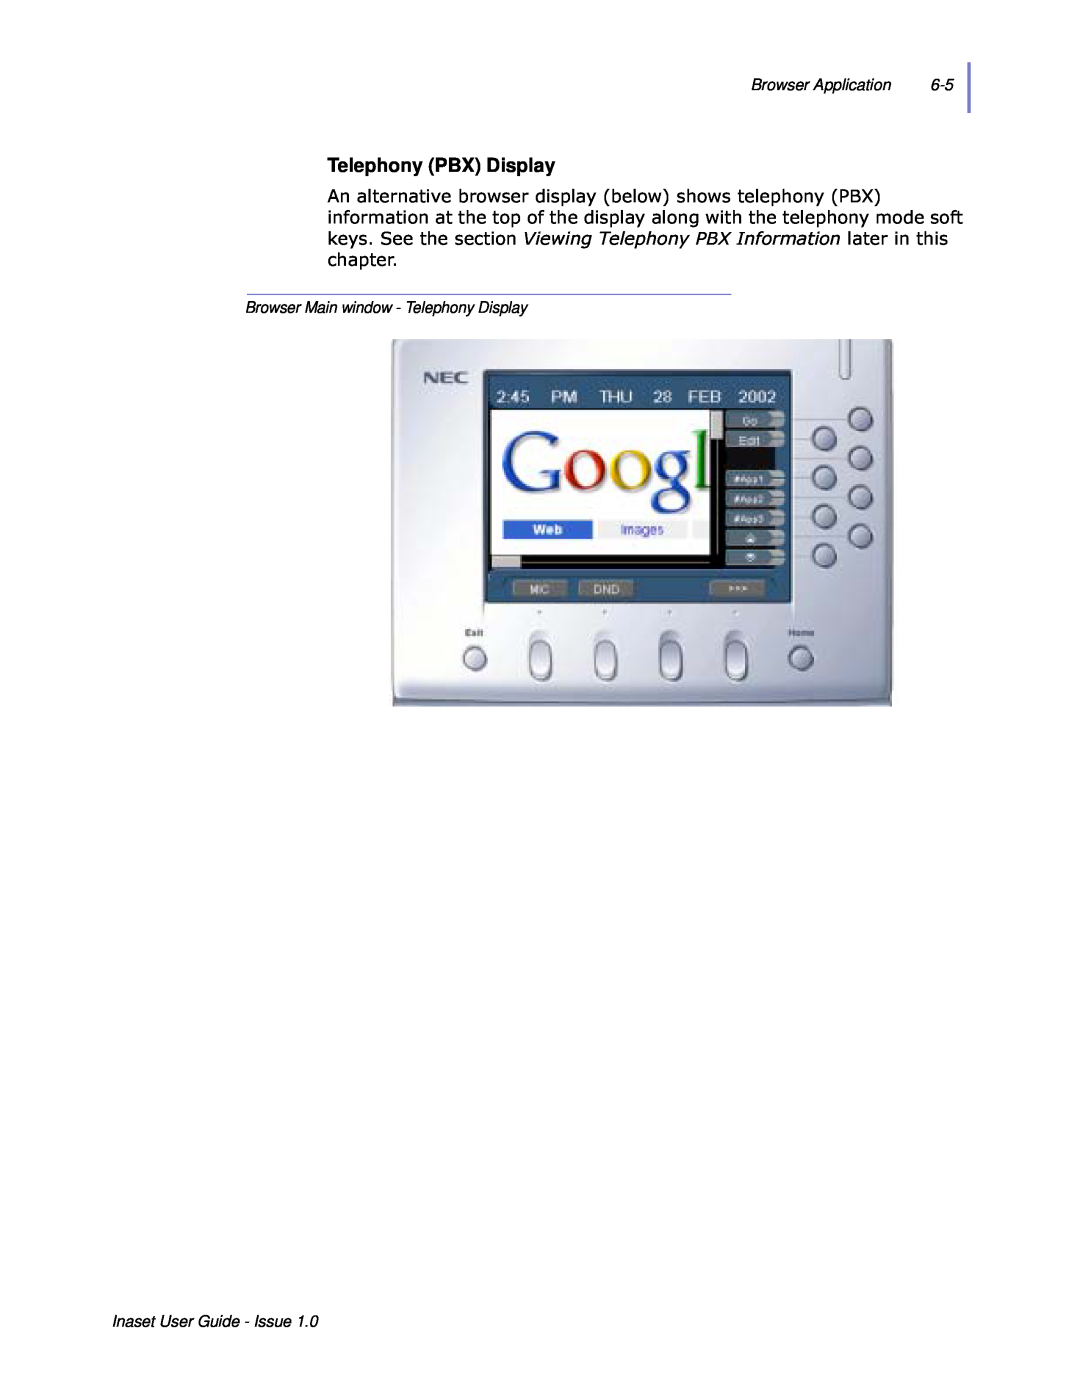 NEC NEAX 2000 IPS manual Telephony PBX Display, Fkdswhu, Browser Application, Browser Main window - Telephony Display 